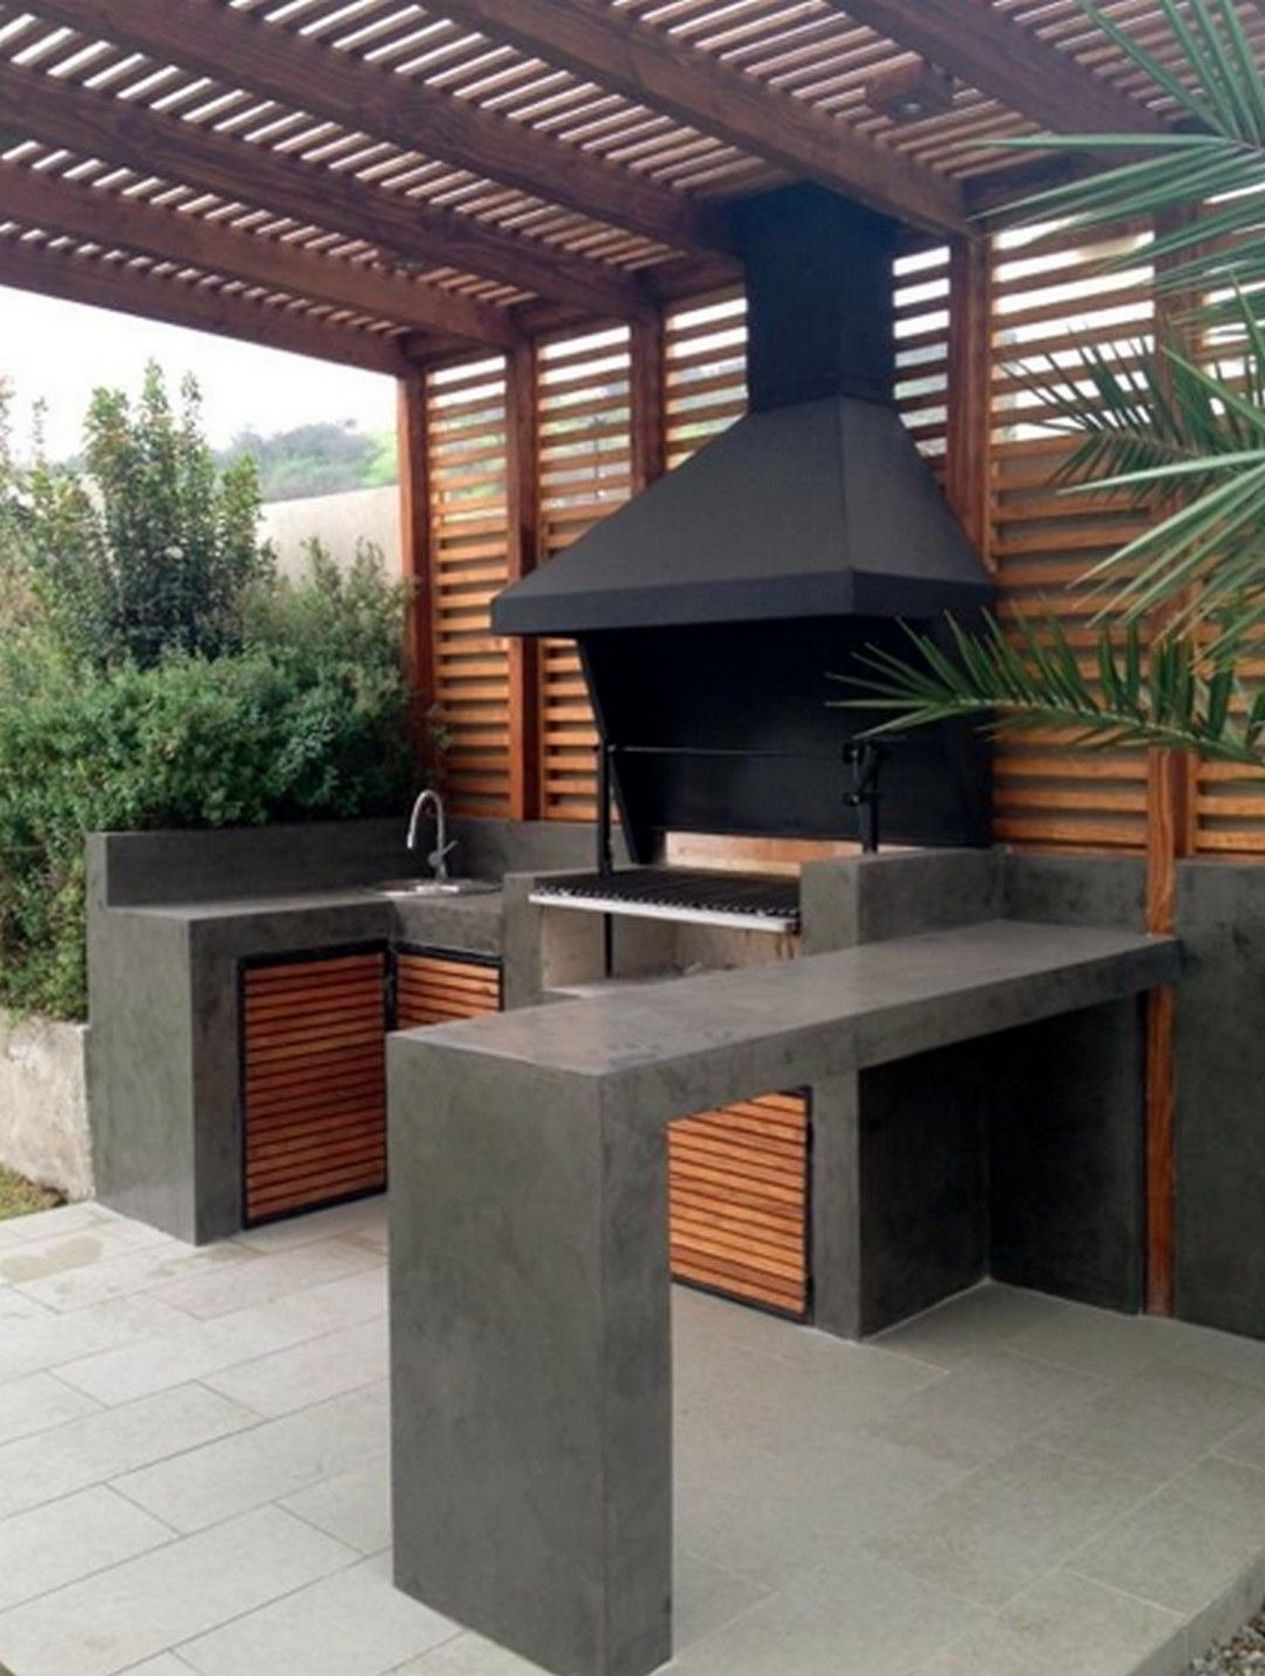 Outdoor Kitchen Design Ideas For Your
landscape